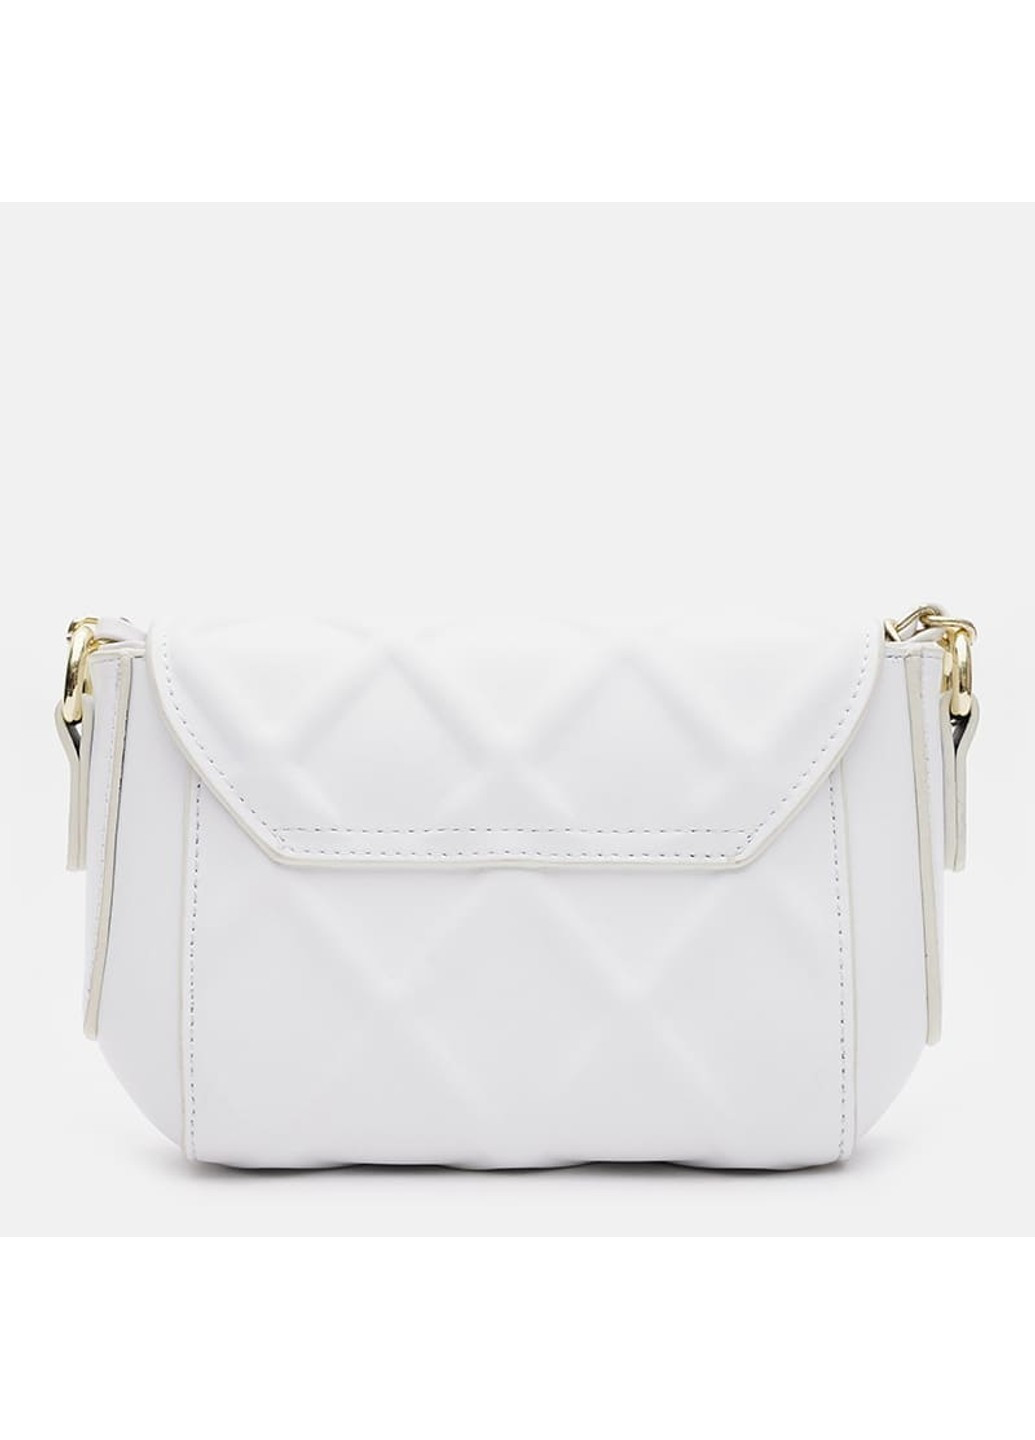 Женская кожаная сумка K11319w-white Keizer (271665102)